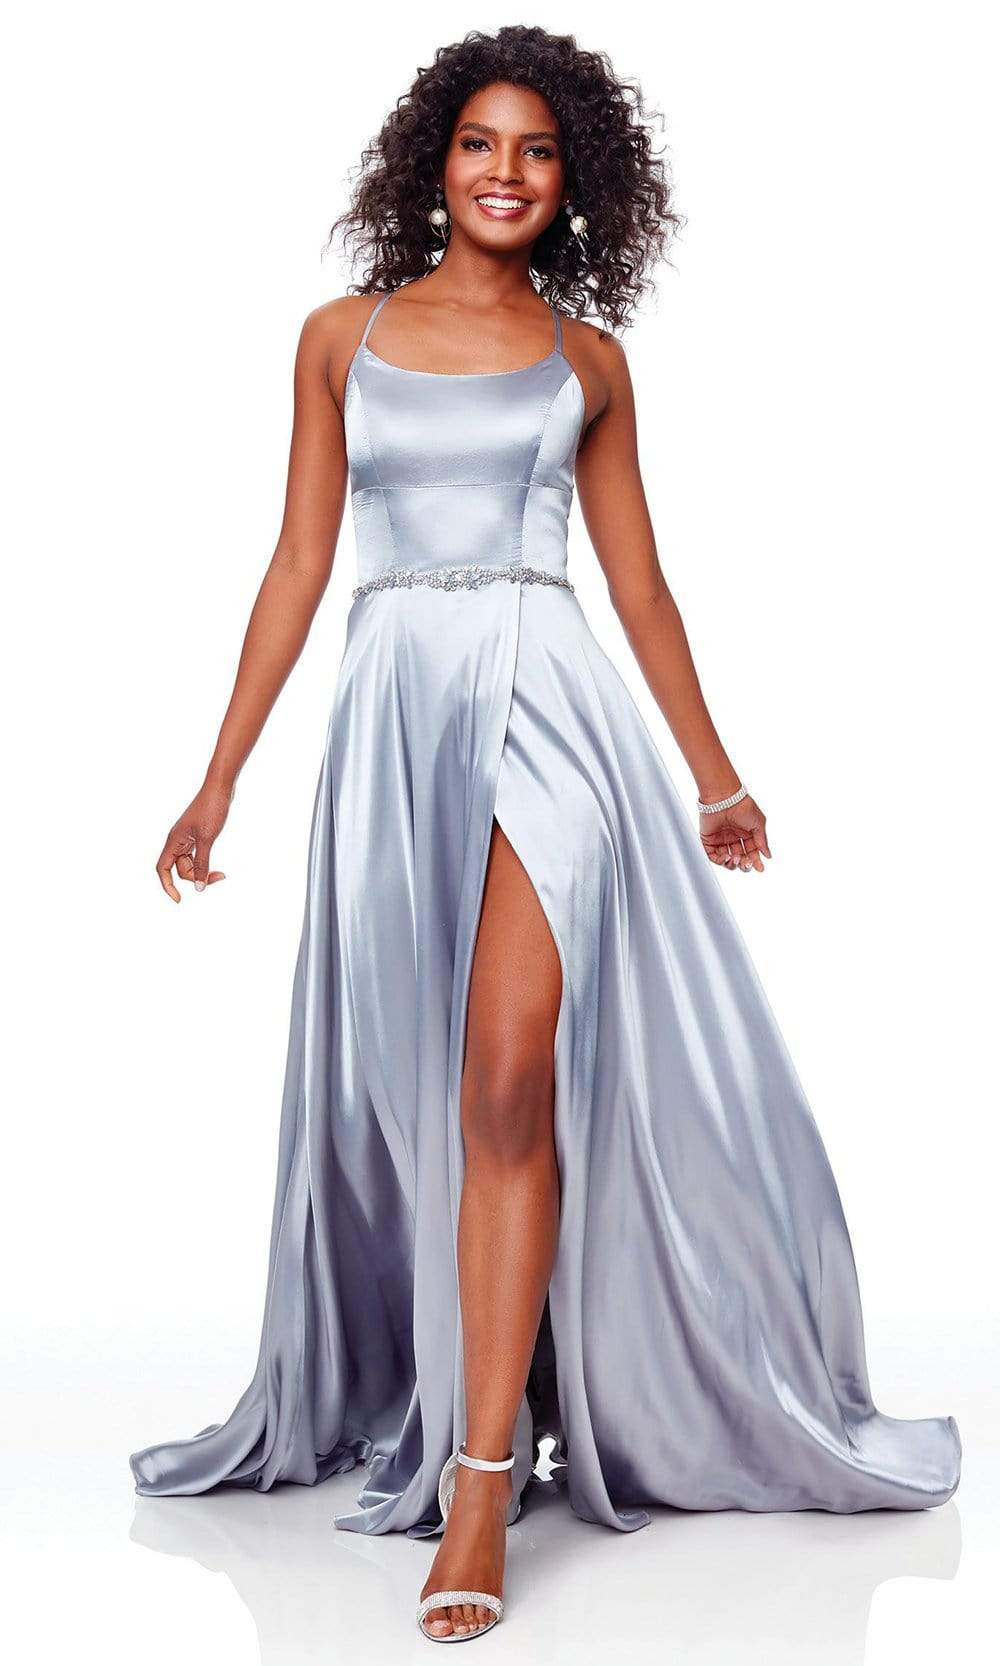 Clarisse - 3712 Embellished Scoop Charmeuse A-line Dress Special Occasion Dress 0 / Platinum